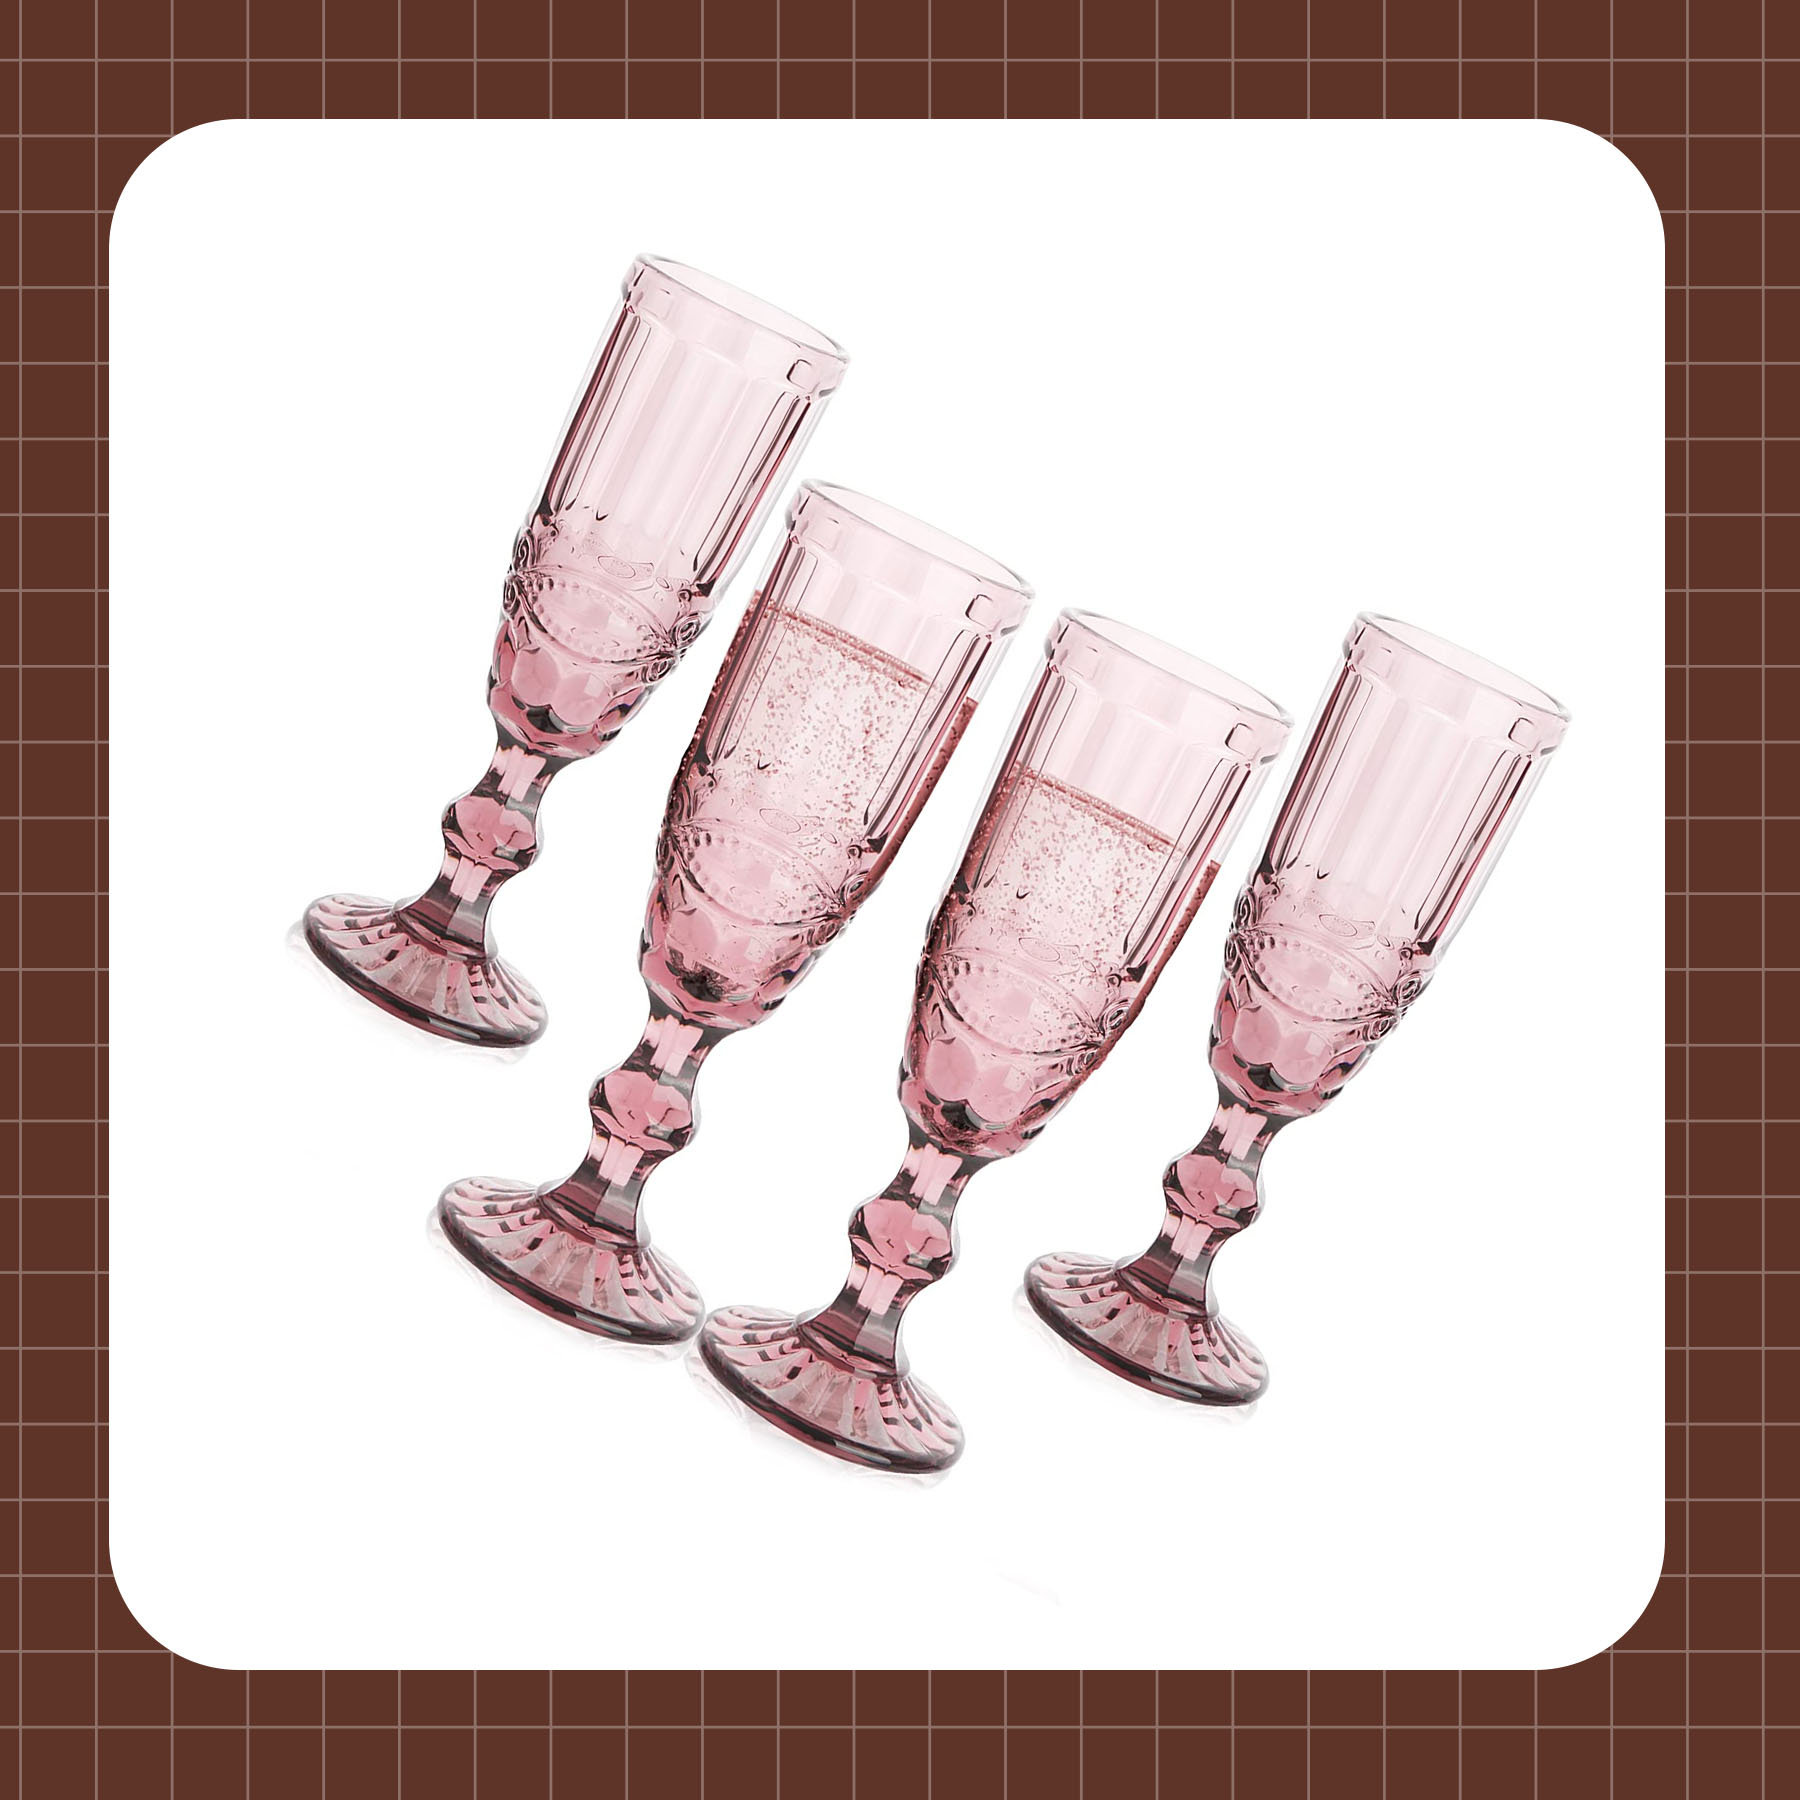 Godinger Meridian 7 Oz. Fluted Champagne Glasses - Set of 4: Champagne  Glasses